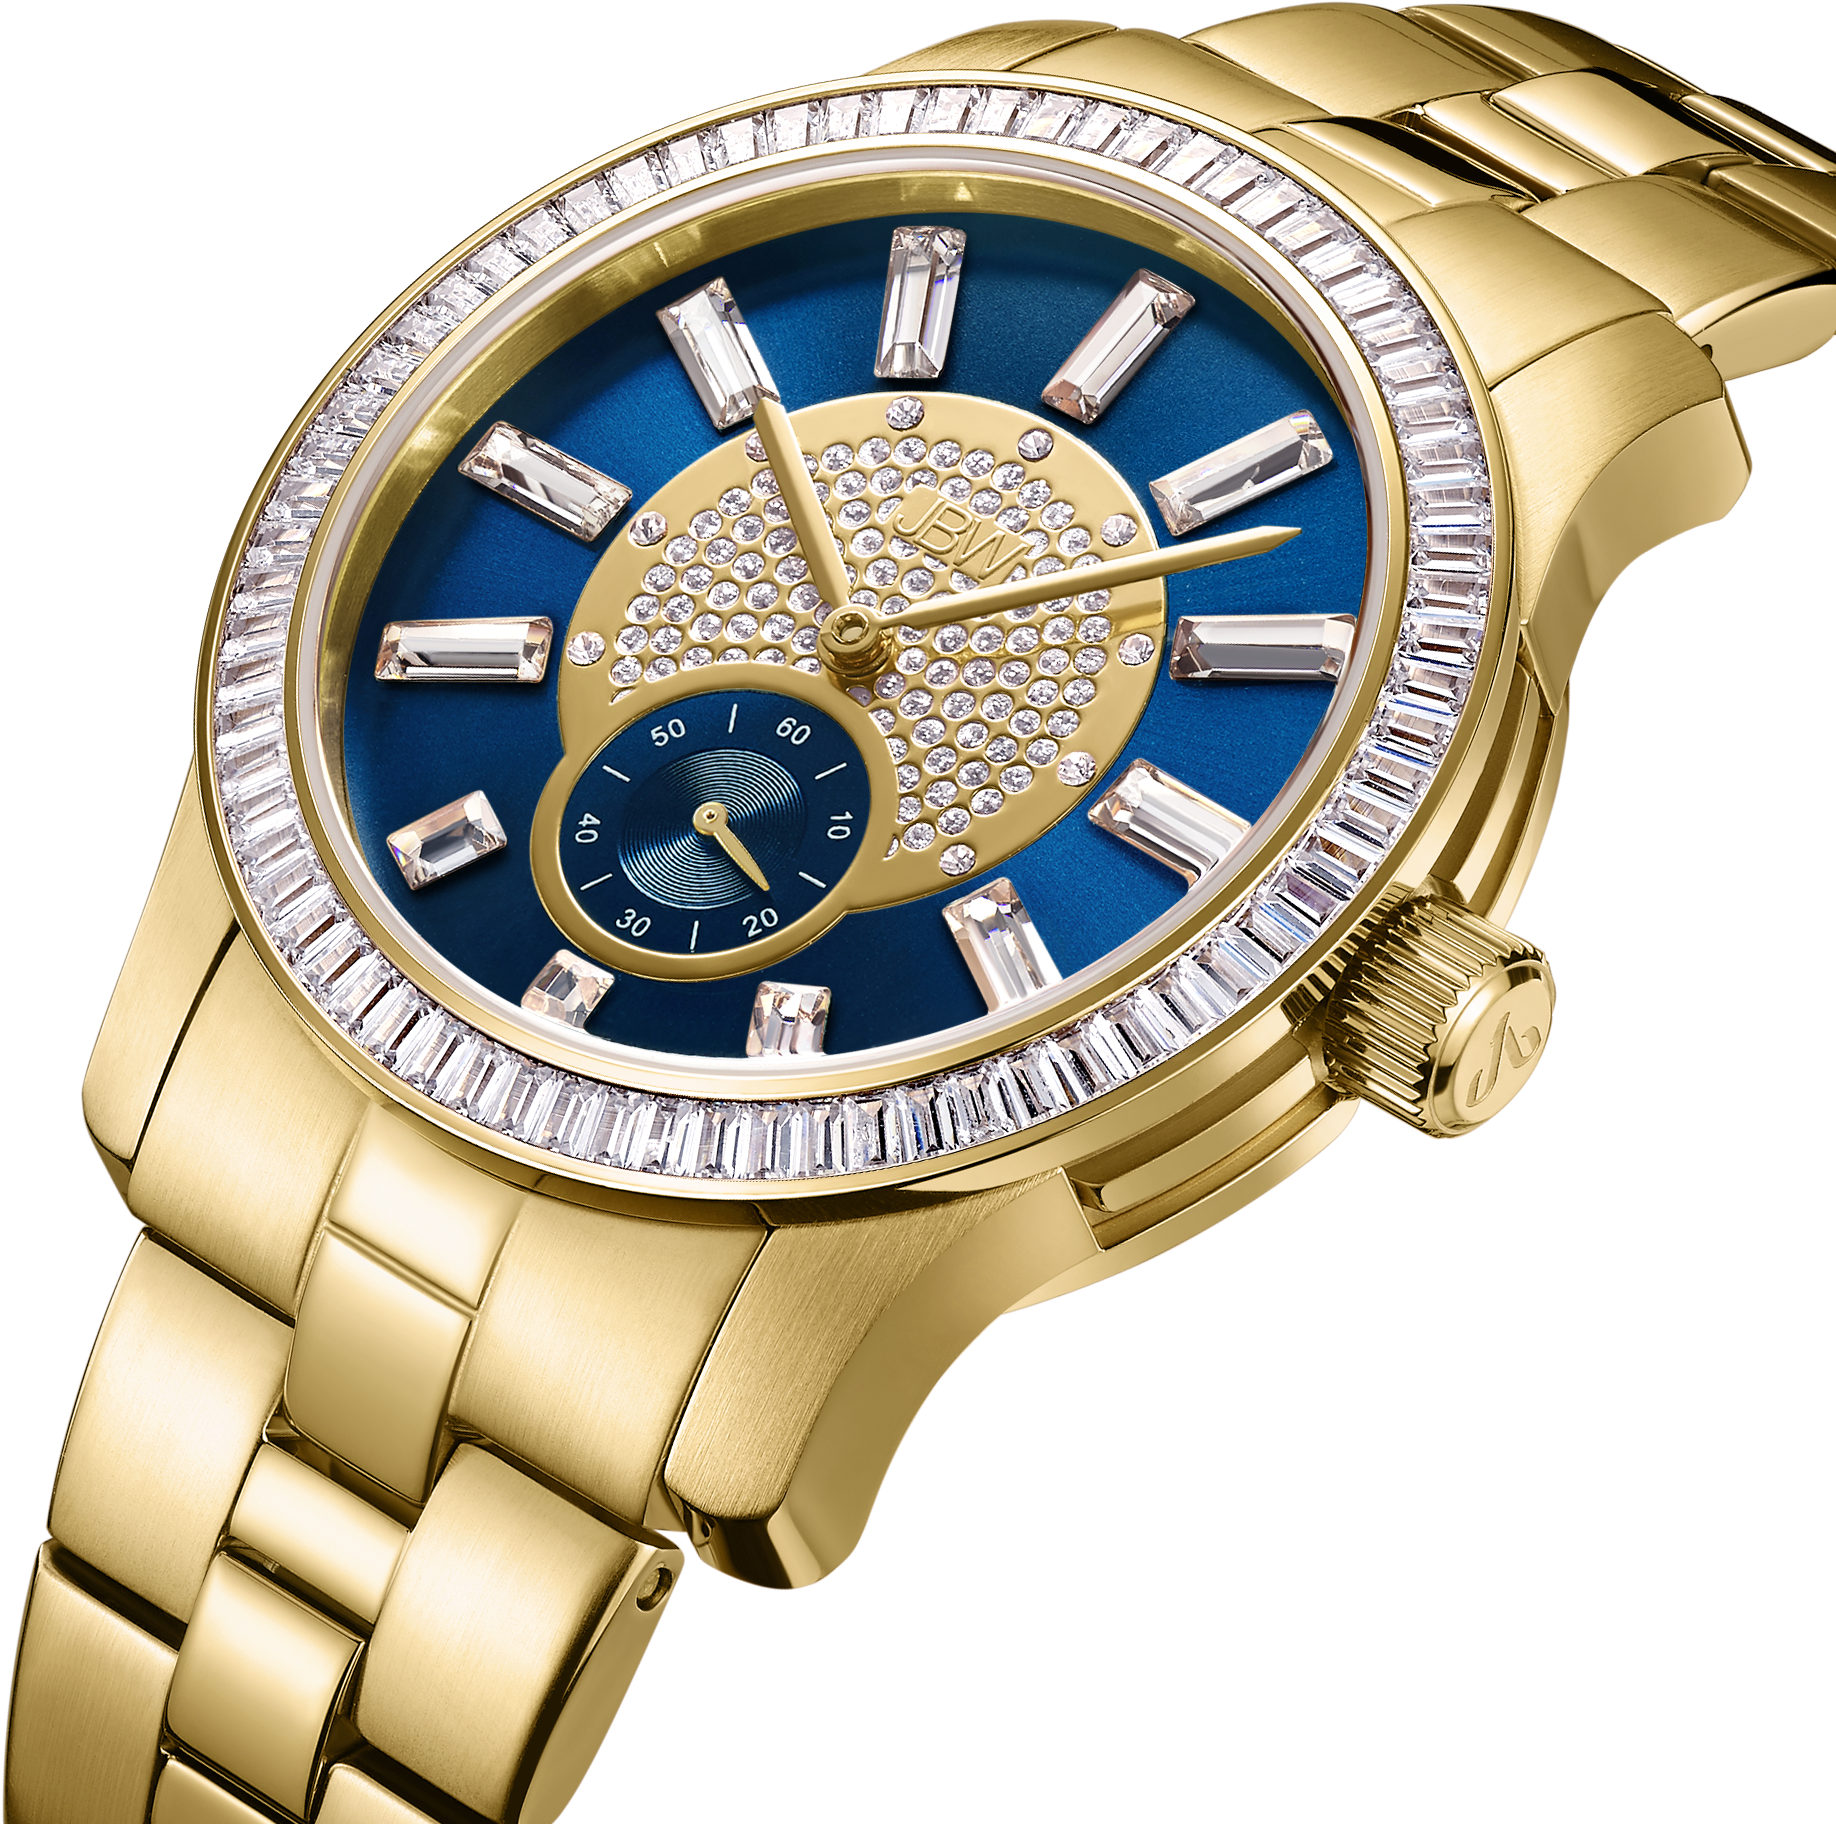 Jbw Celine Watch For Men - Jbw Ladies Diamond Watch With Swarovski Crystals Rose (2000x2000), Png Download